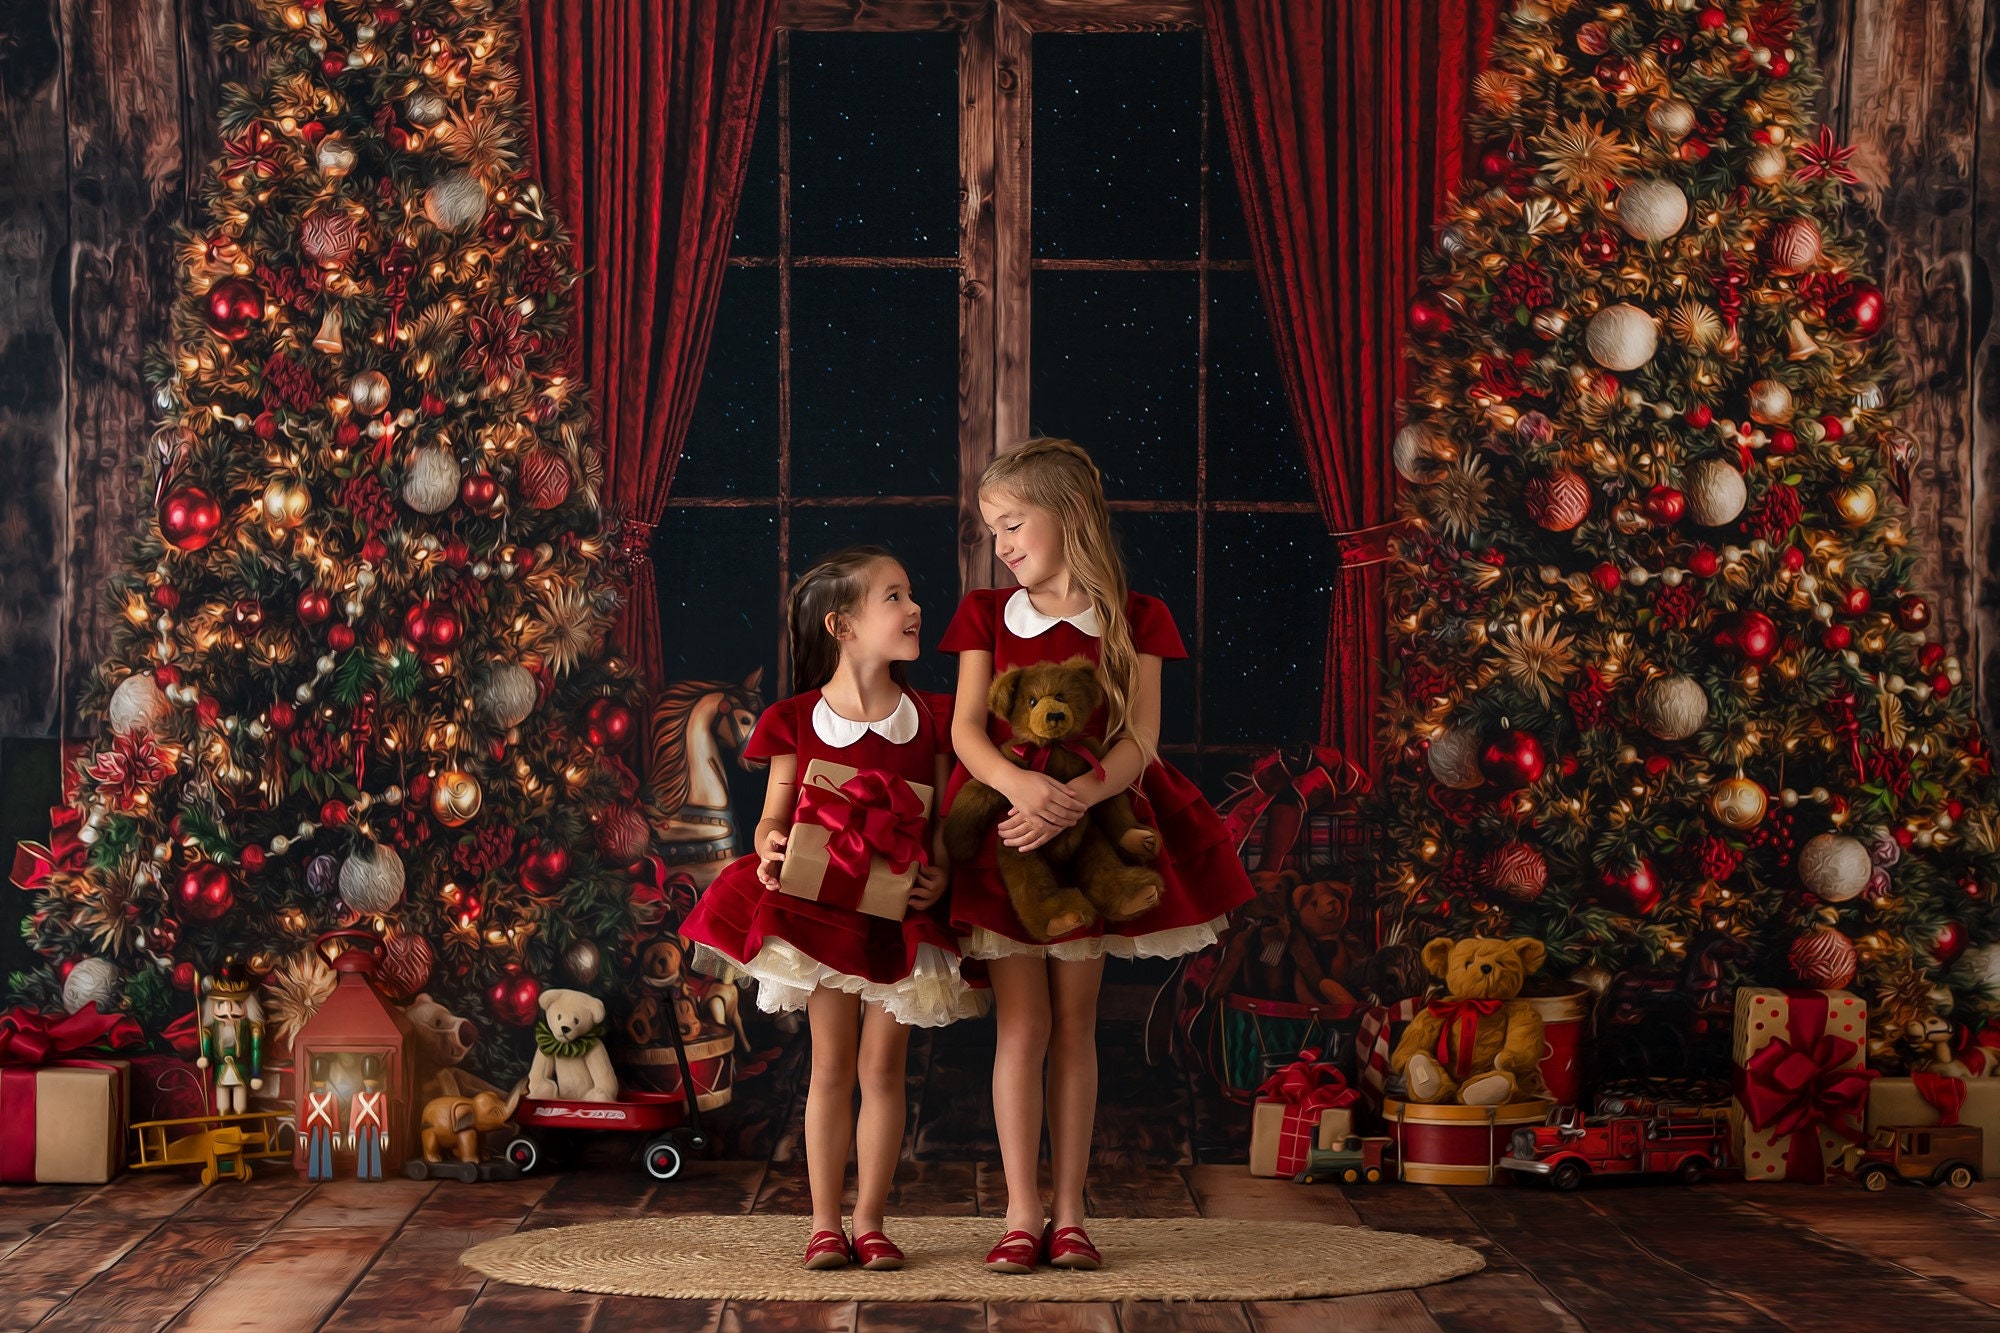 A Holly Jolly Christmas Photography Backdrop Christmas | Etsy